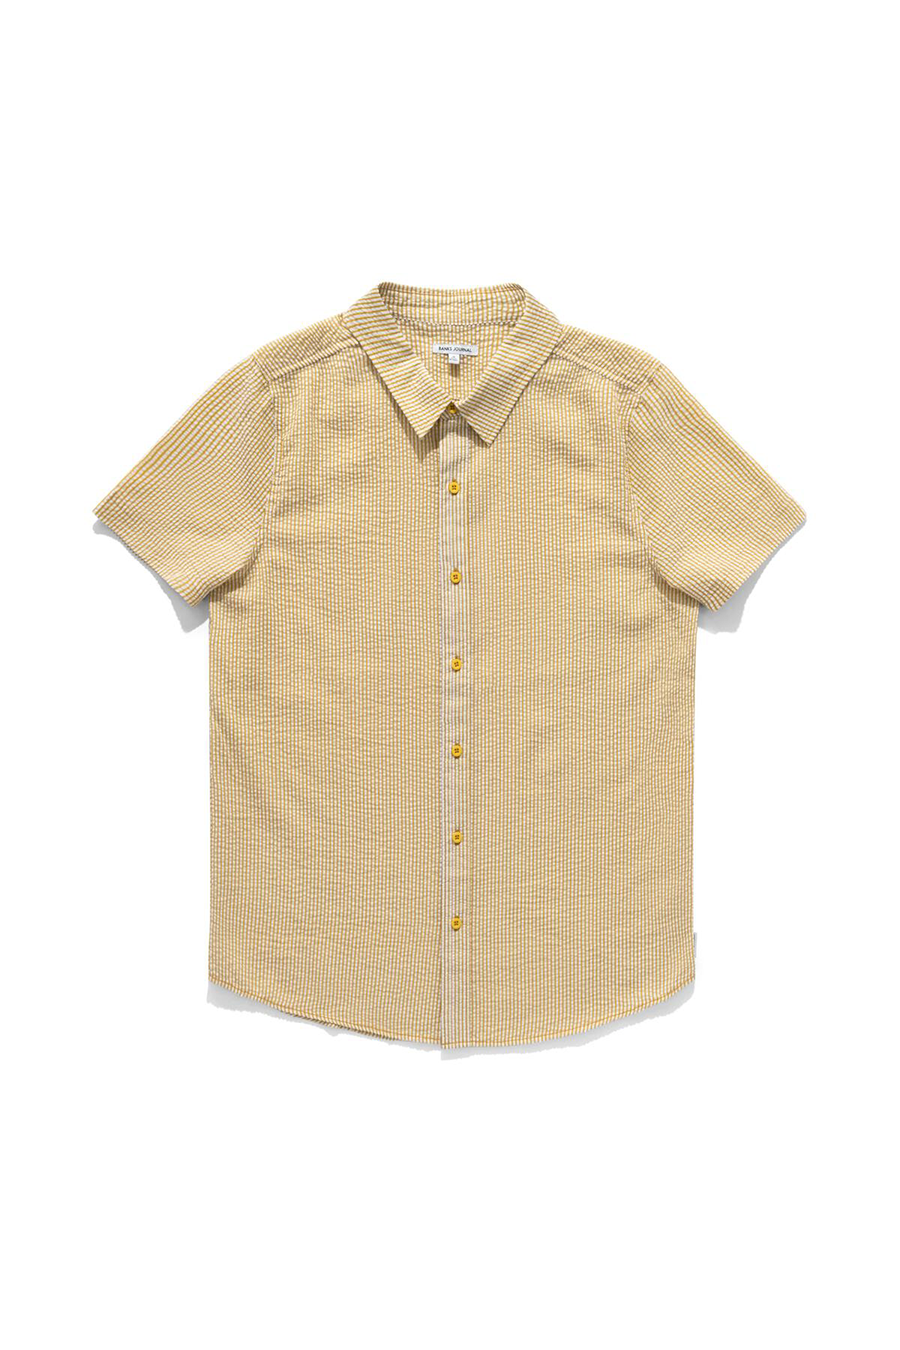 Tallows Shirt | Dark Mustard - Main Image Number 1 of 1